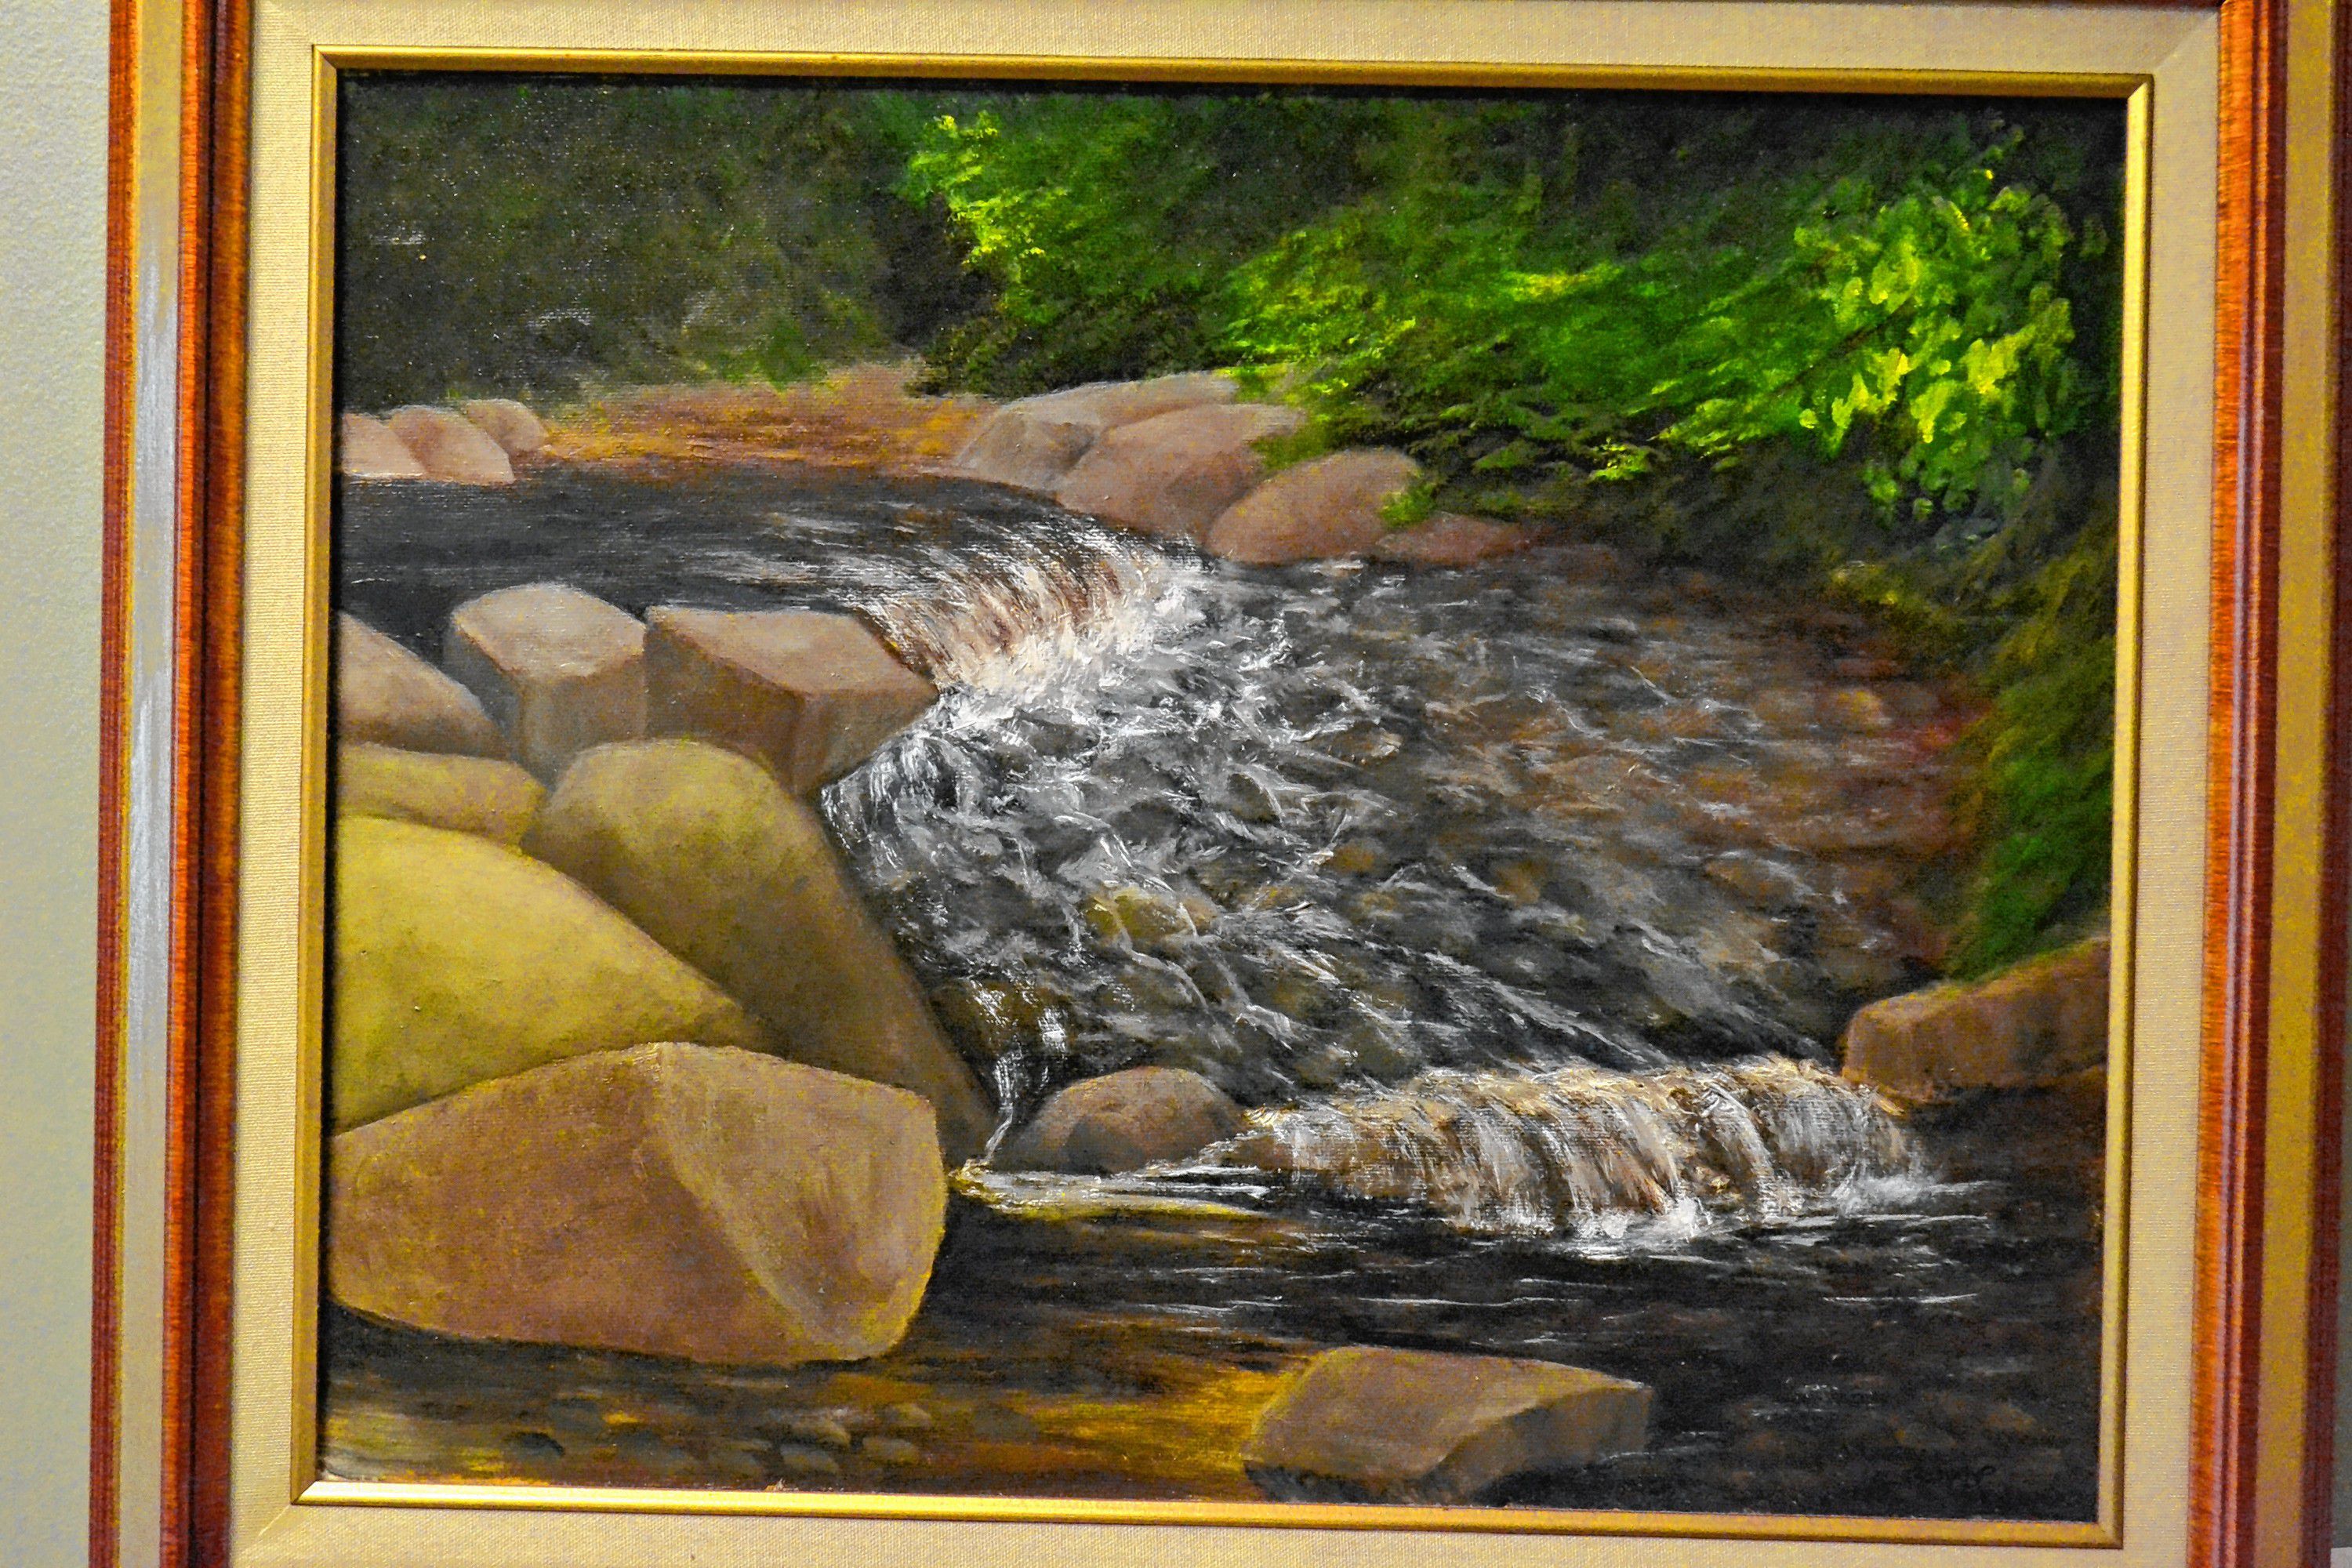 Pemi River, White Mountains, Mary Crump, N.H. Art Association, 2 Pillsbury St. TIM GOODWIN / Insider staff